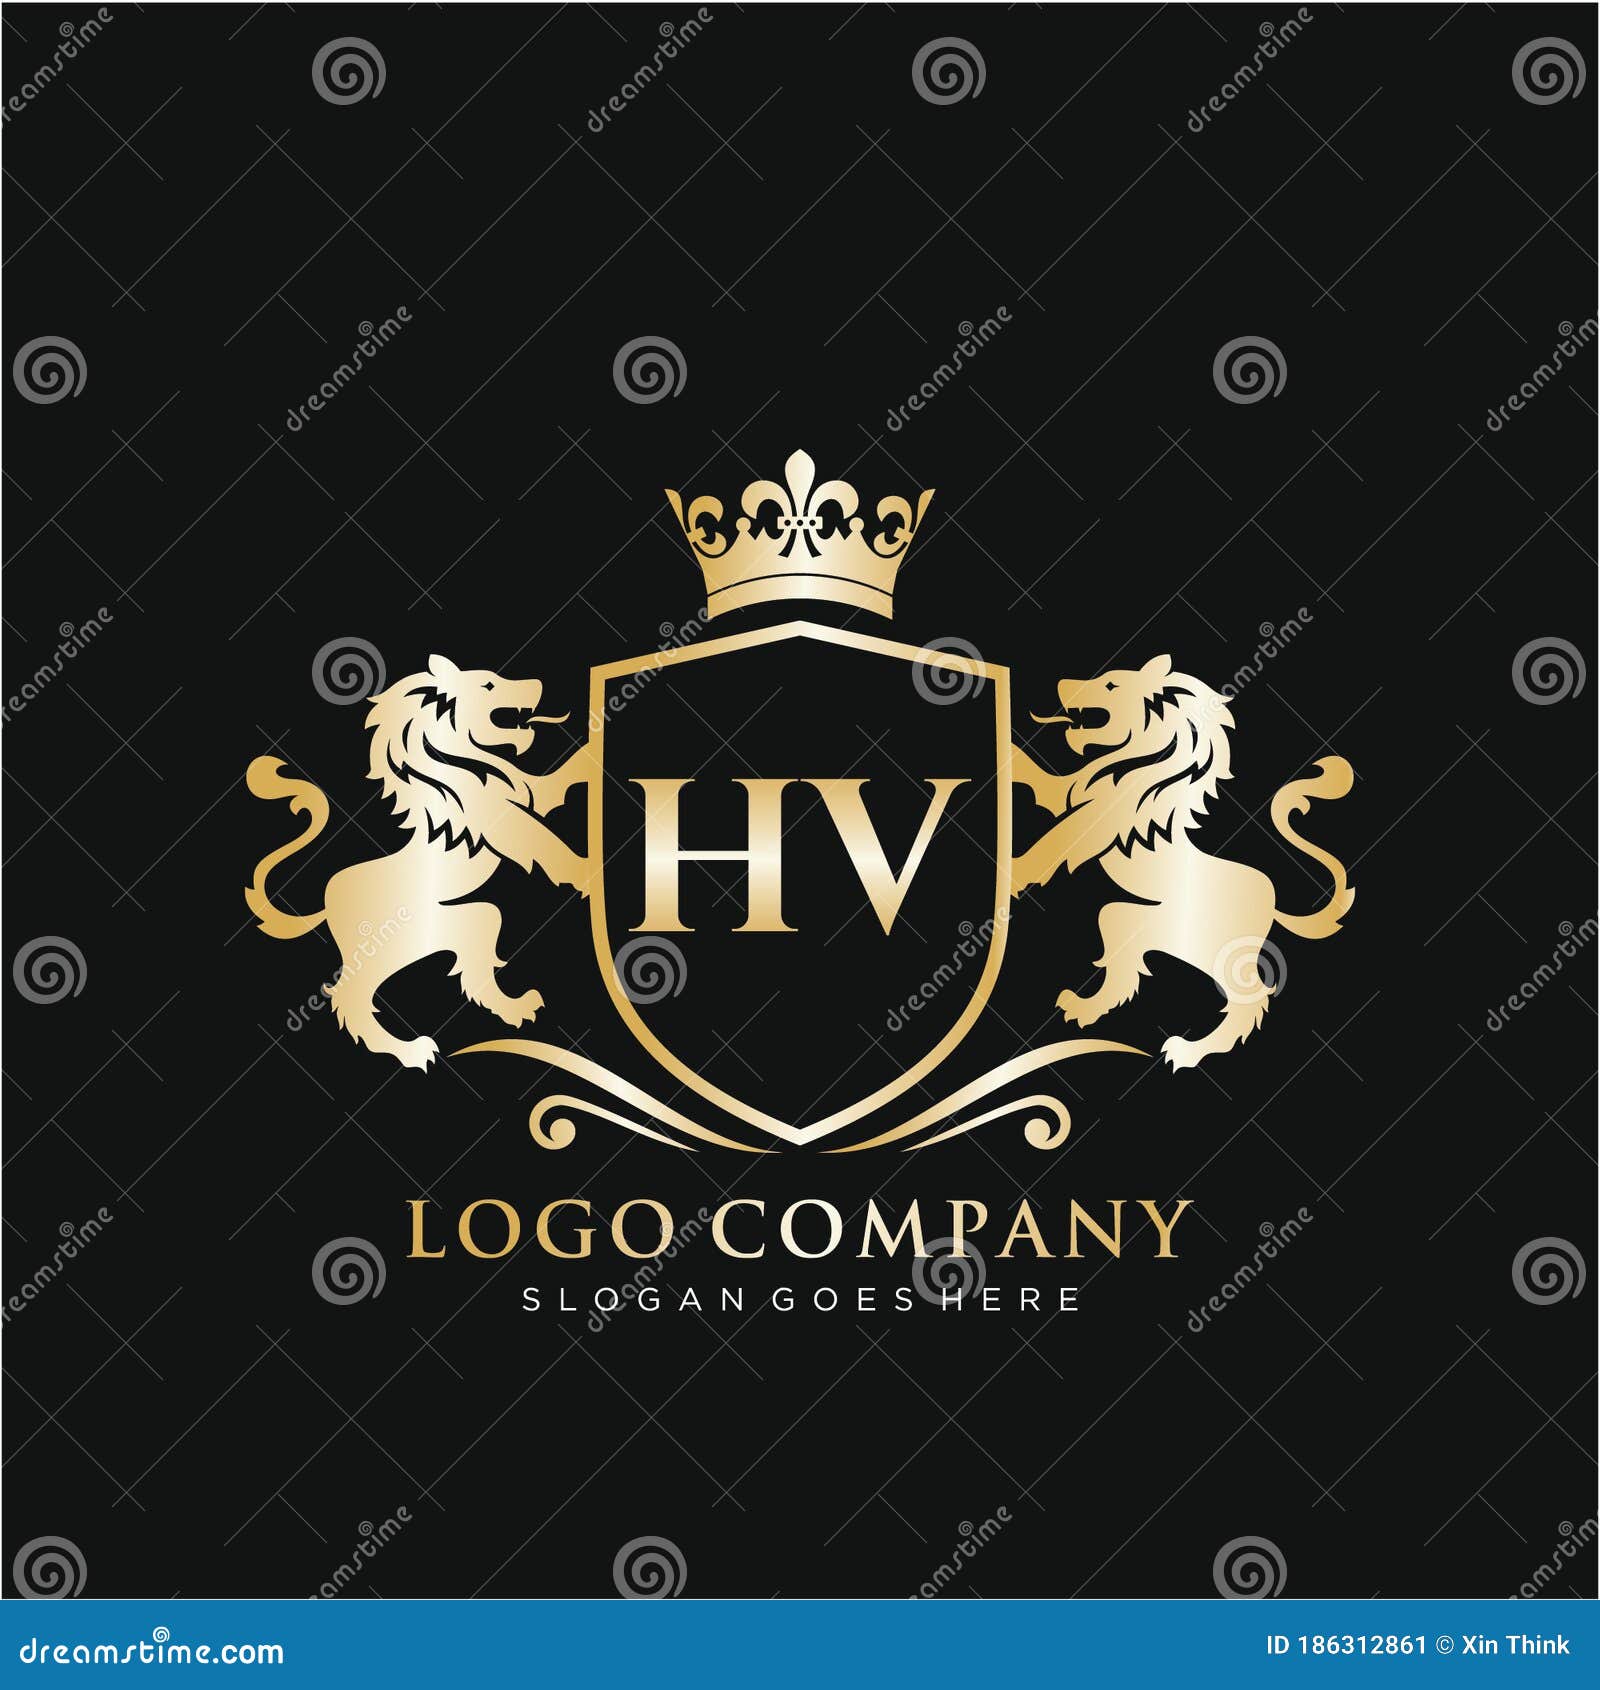 100,000 Hv logo Vector Images | Depositphotos